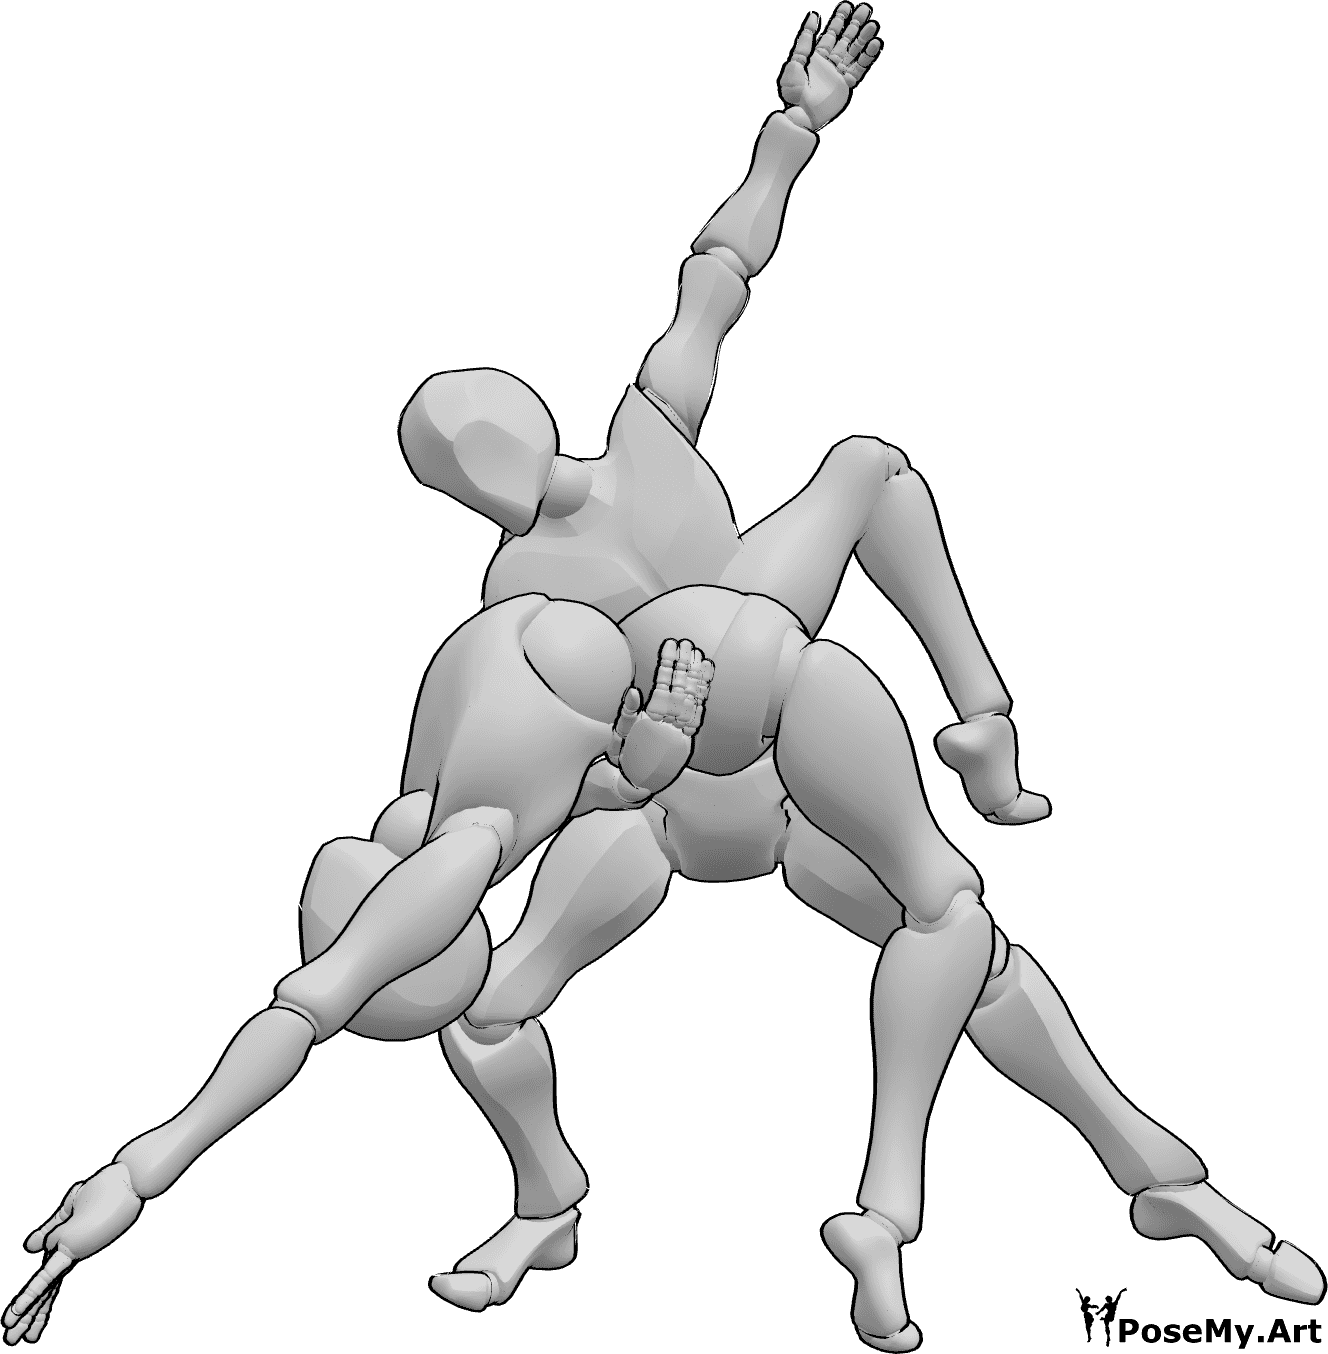 Pose Reference- Female male tango pose - Dynamic tango pose, male is holding the female with right hand